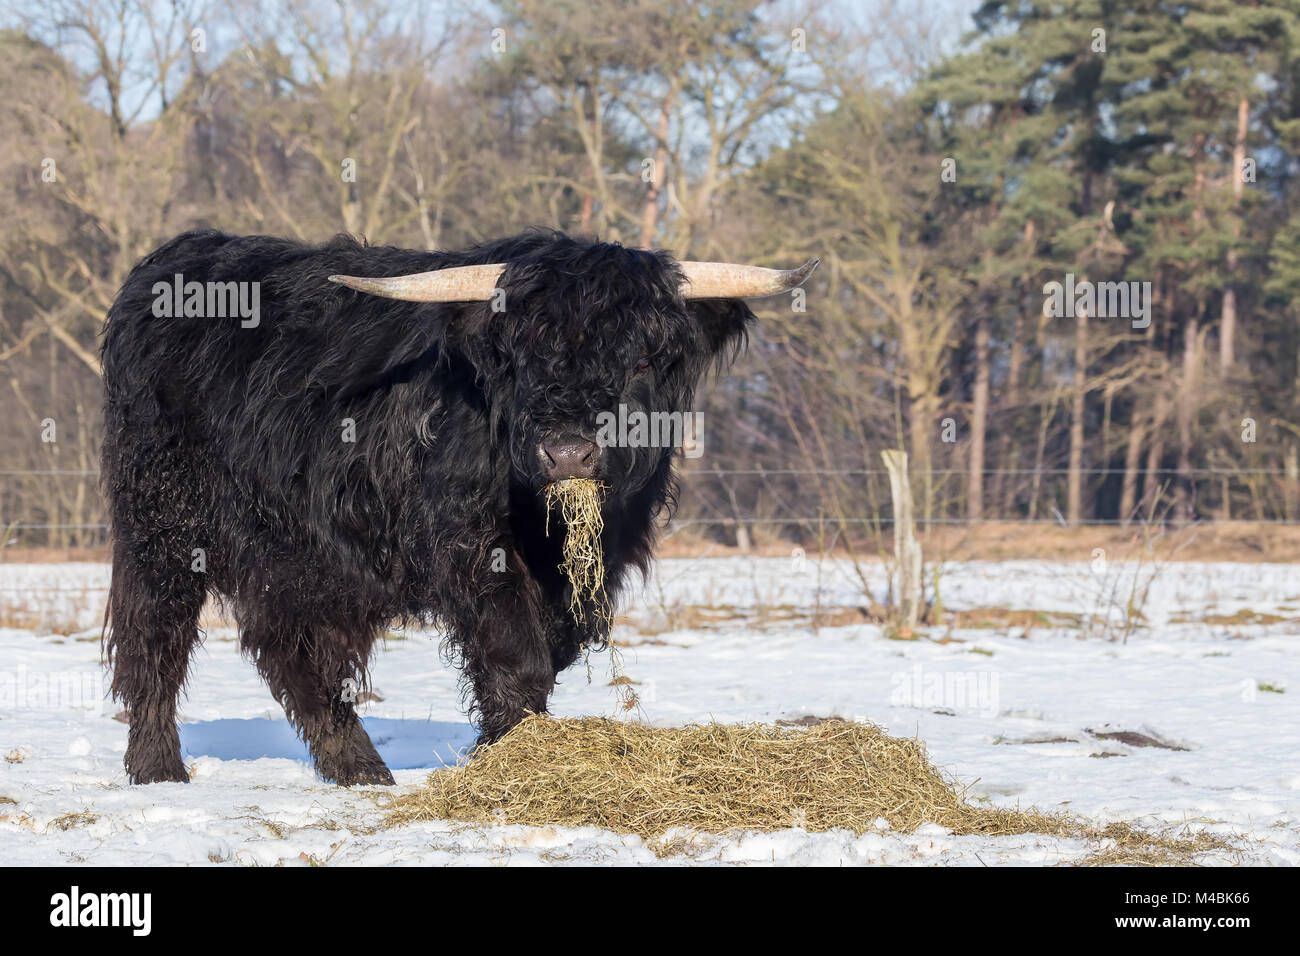 Scottish highlander bull eating hay in winter snow Stock Photo